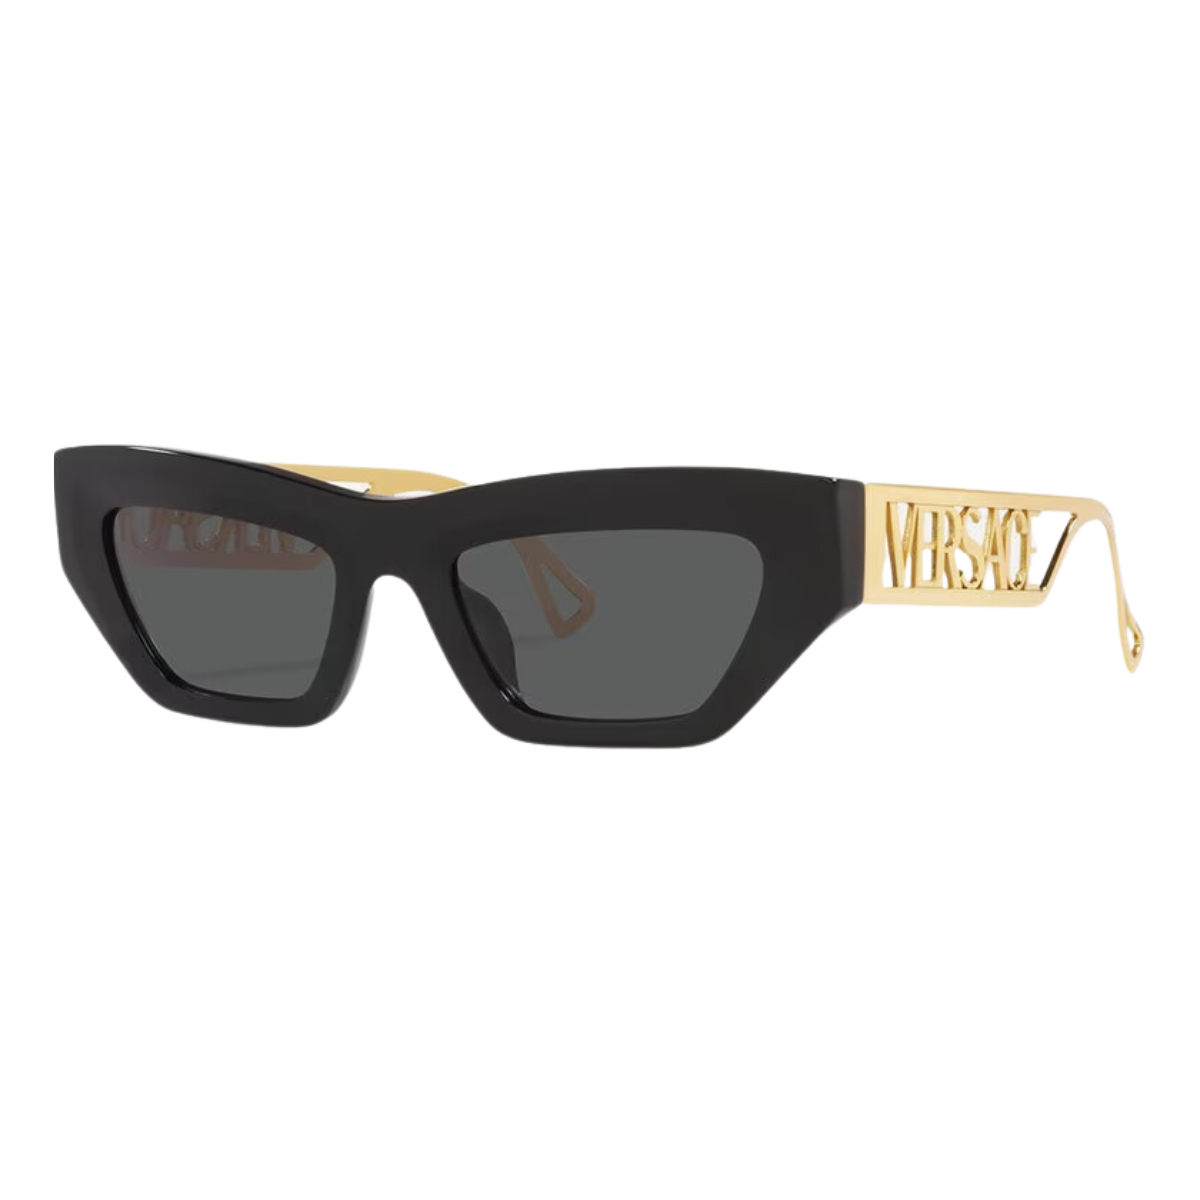 "Versace 4432U GB1/87 women's sunglasses: cat eye design, full frame, gold temple accents. Shop at optorium for luxury, non-polarized eyewear."